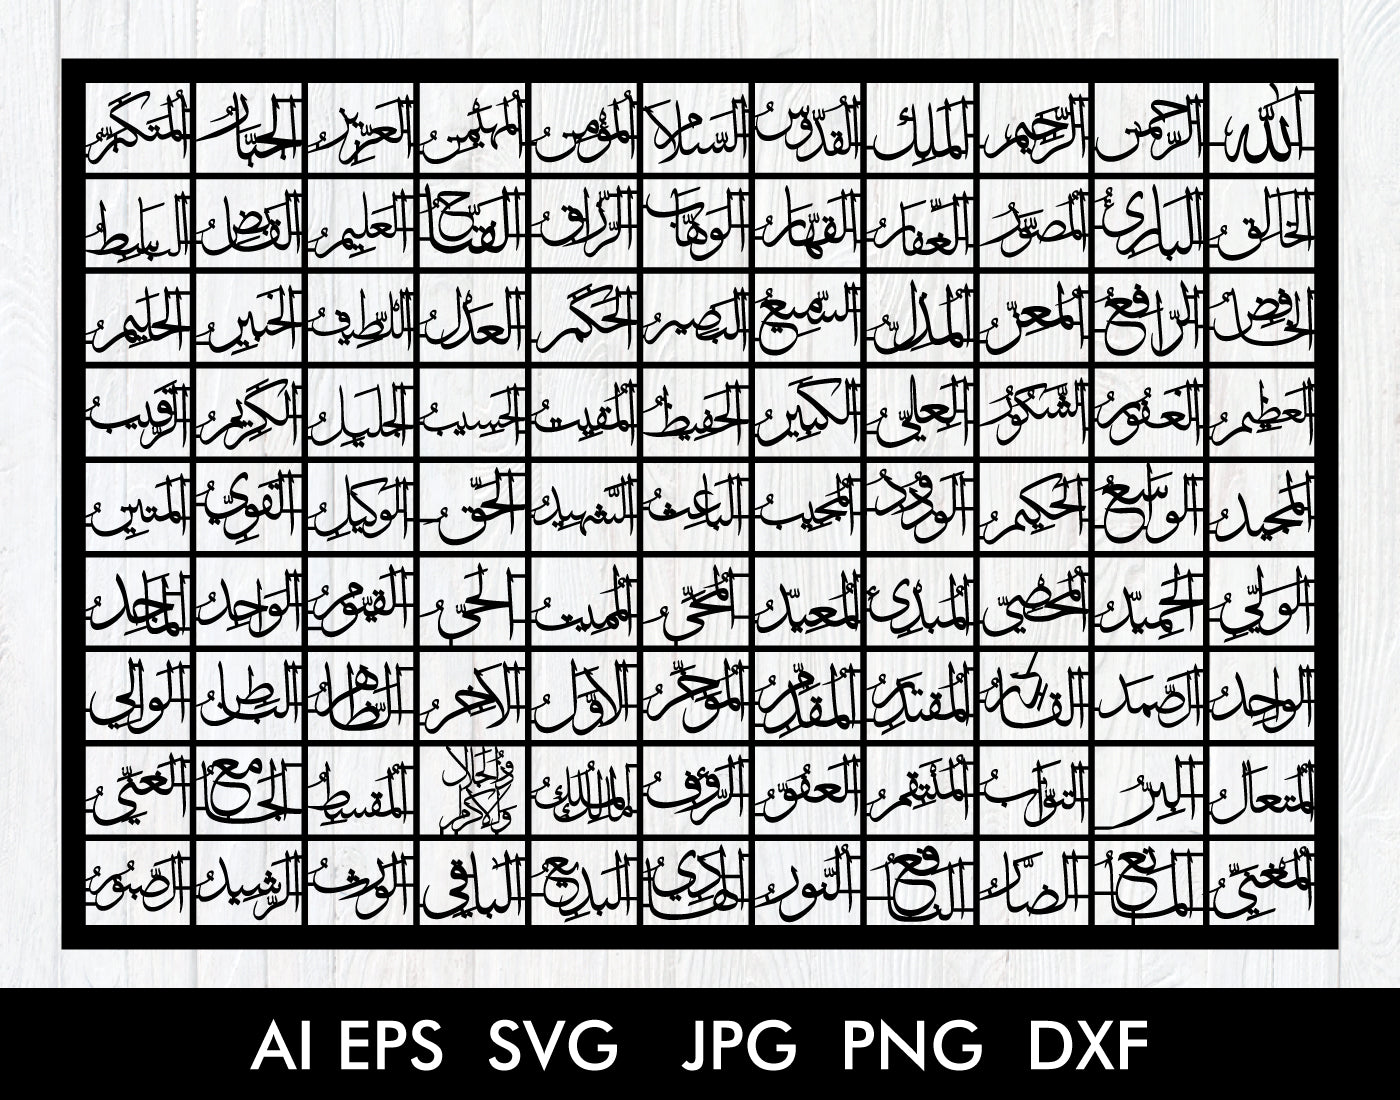 99 Names Of ALLAH in Vector